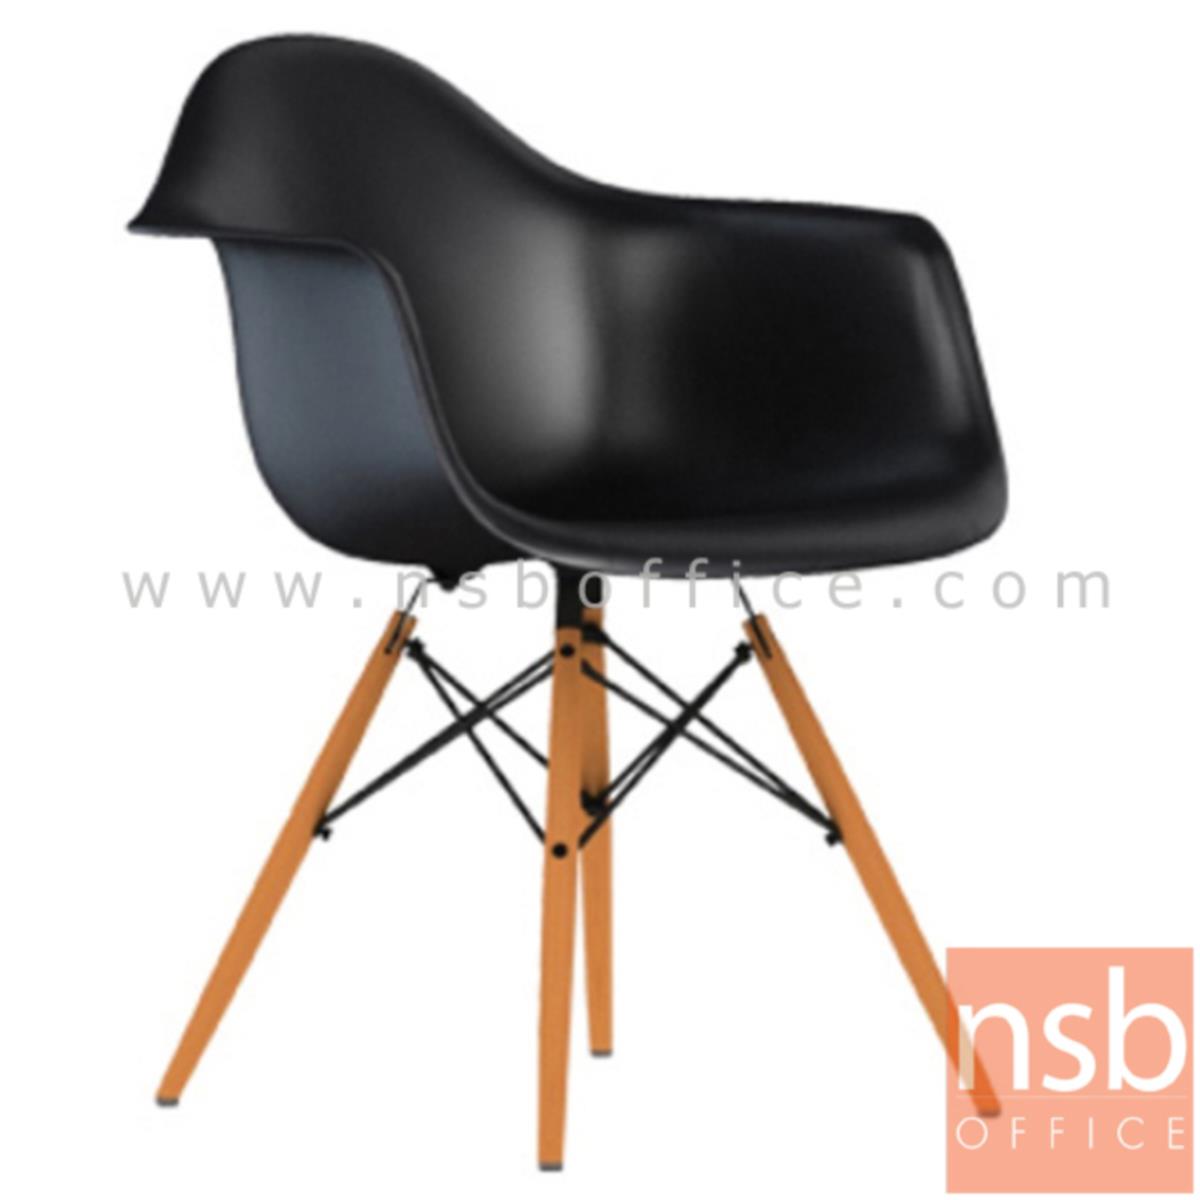 B05A089:เก้าอี้โมเดิร์นโพลี่ รุ่น Nazario (นาซารีโอ) ขนาด 62W cm. โครงเหล็กเส้นพ่นดำ ขาไม้สีบีช